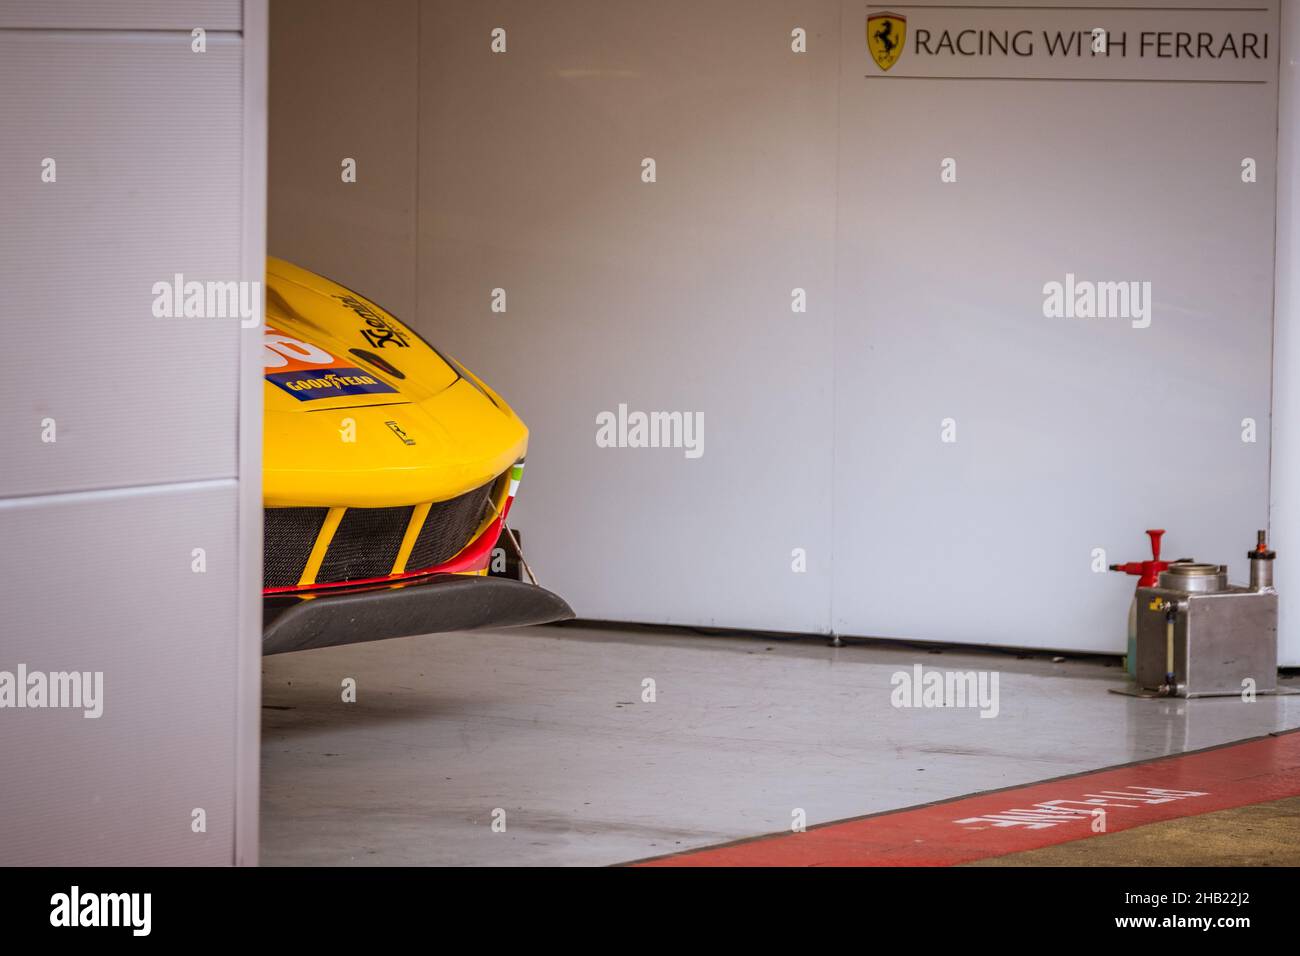 #66, JMW MOTORSPORT, GBR, Ferrari F488 GTE EVO, Jody Fannin (GBR), Andrea Fontana (ITA), Rodrigo Sales (USA). 2021 European Le Mans Series, Barcelona, Stock Photo